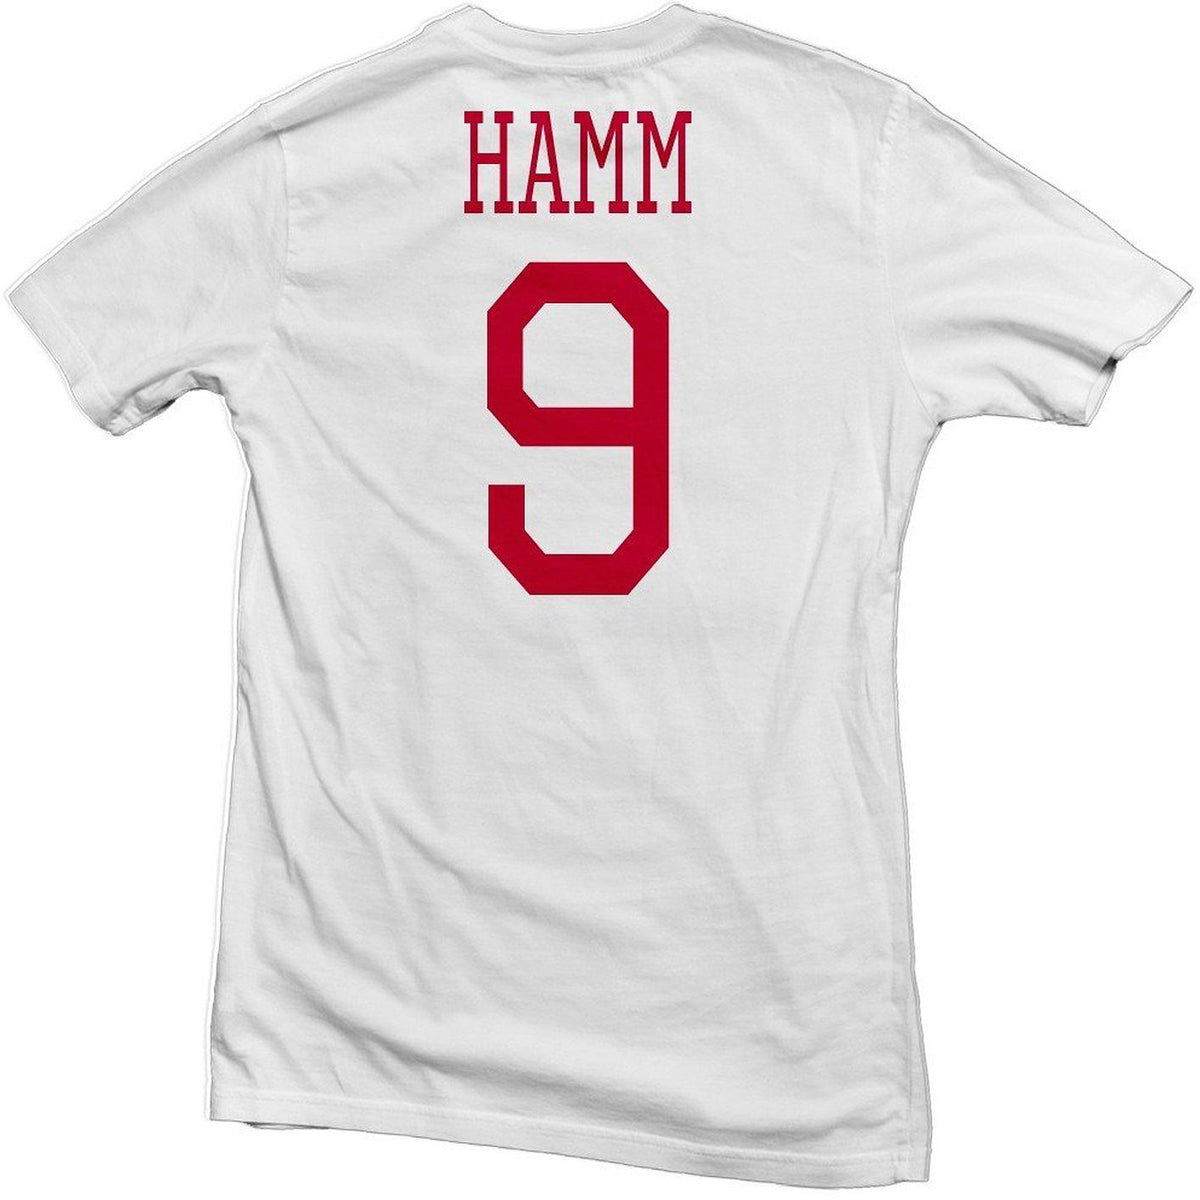 USA Don't Tread on Me Legend Tee: Mia Hamm Printed Tee T-shirts 411 Youth Medium White Youth